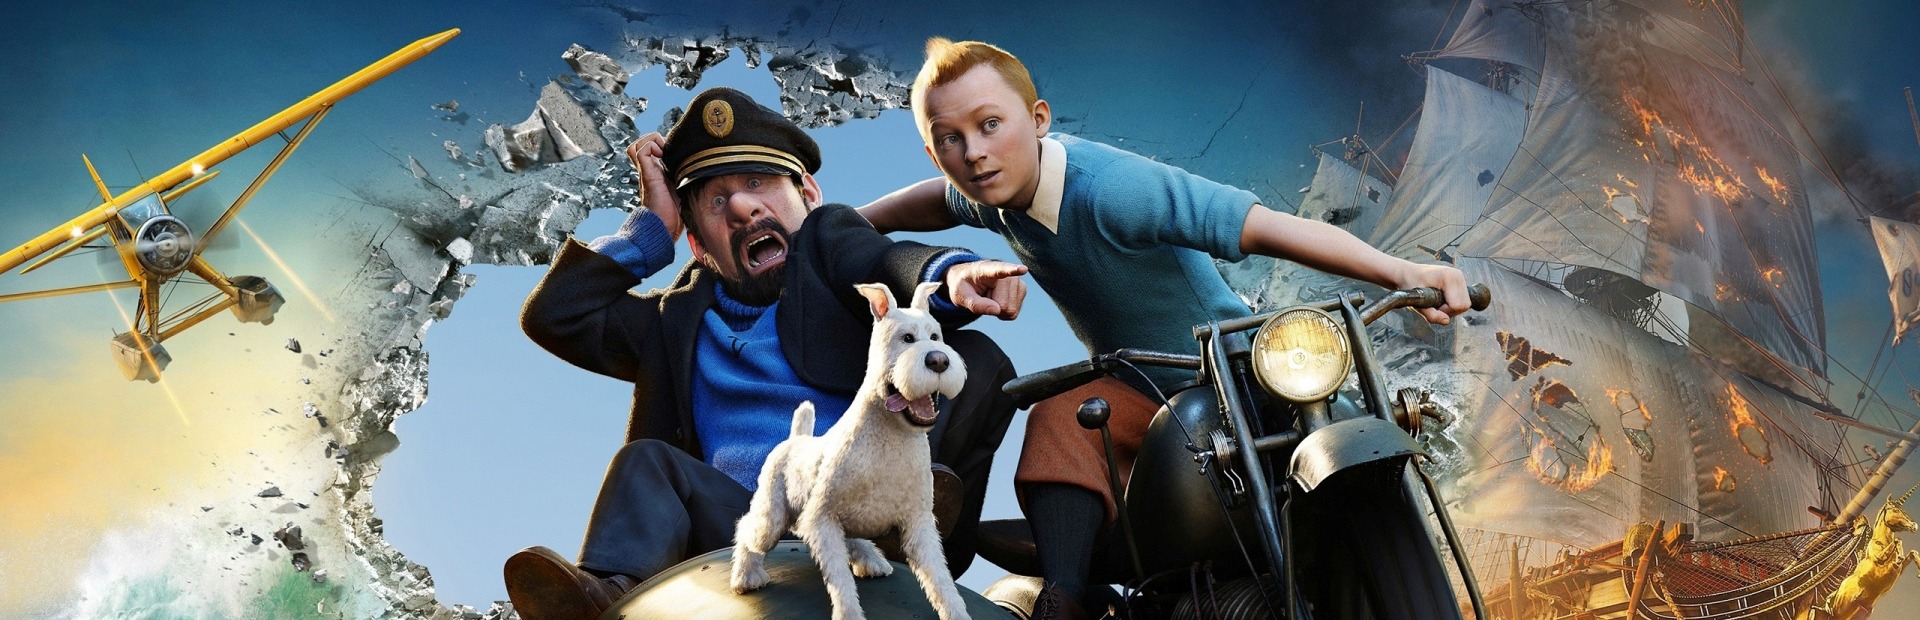 Игры тайна единорога. The Adventures of Tintin: Secret of the Unicorn. The Adventures of Tintin (2011) Cover. The Adventures of Tintin игра. Саймон Пегг приключения Тинтина тайна единорога.